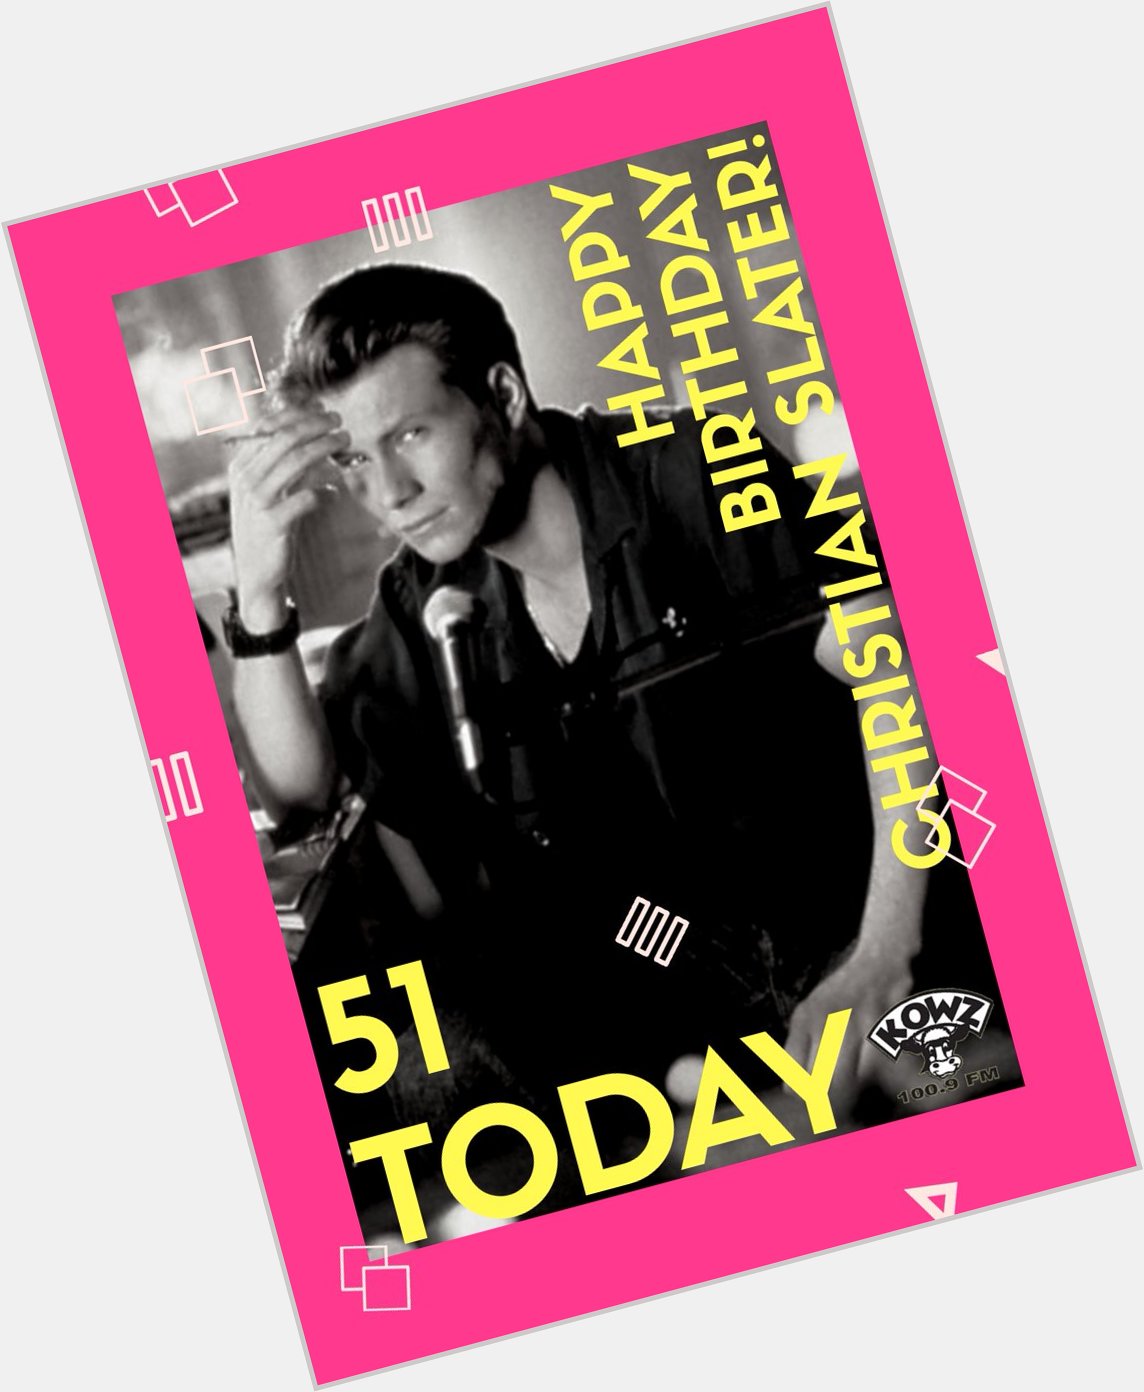 Happy birthday to Christian Slater! 